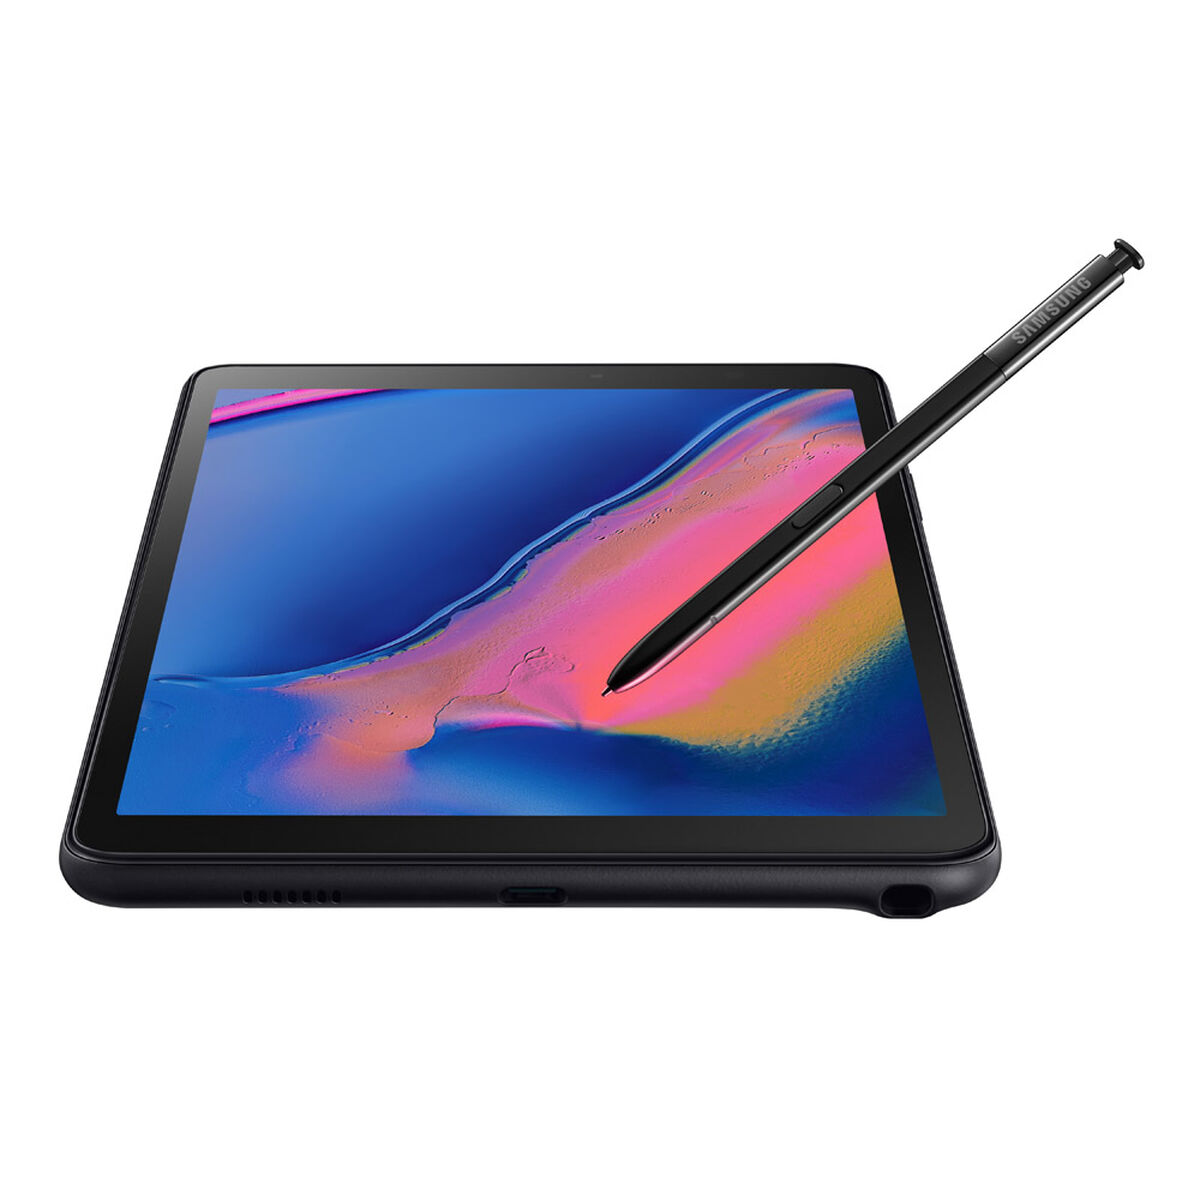 Tablet Samsung Galaxy Tab A Octa Core 3GB 32GB 8" Negra + S Pen